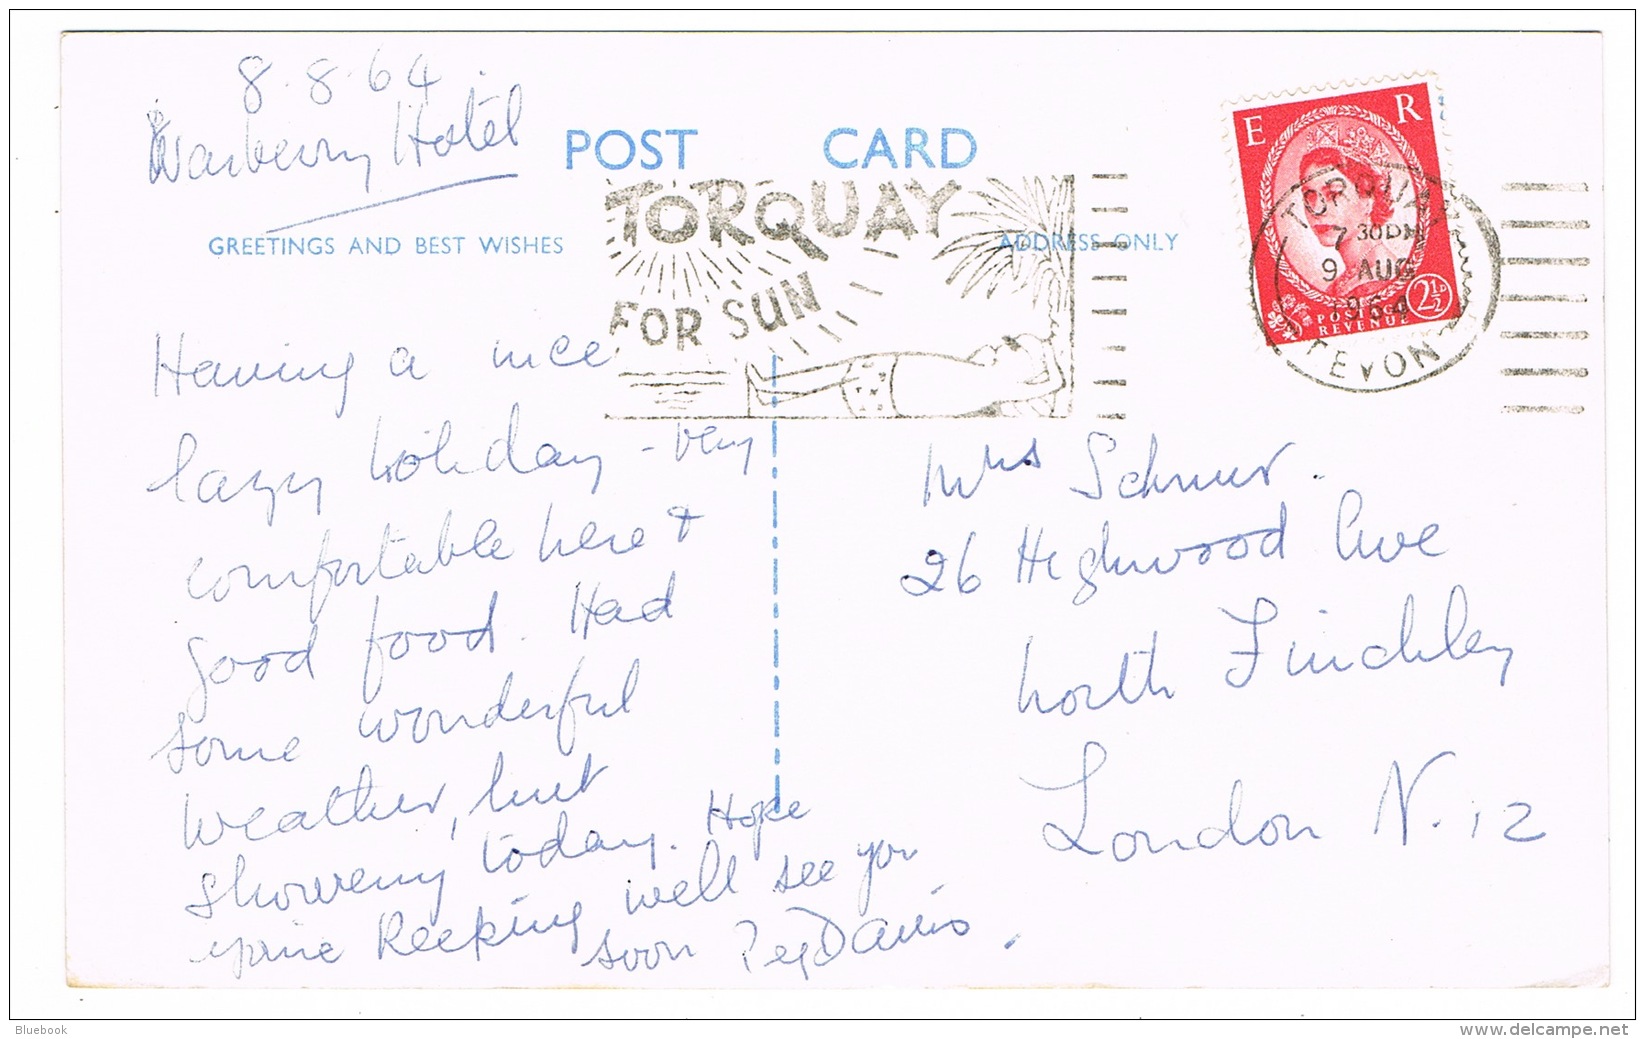 RB 1111 - 1964 Postcard - Warberry Hotel Torquay Devon - Good Slogan Postmark - Torquay